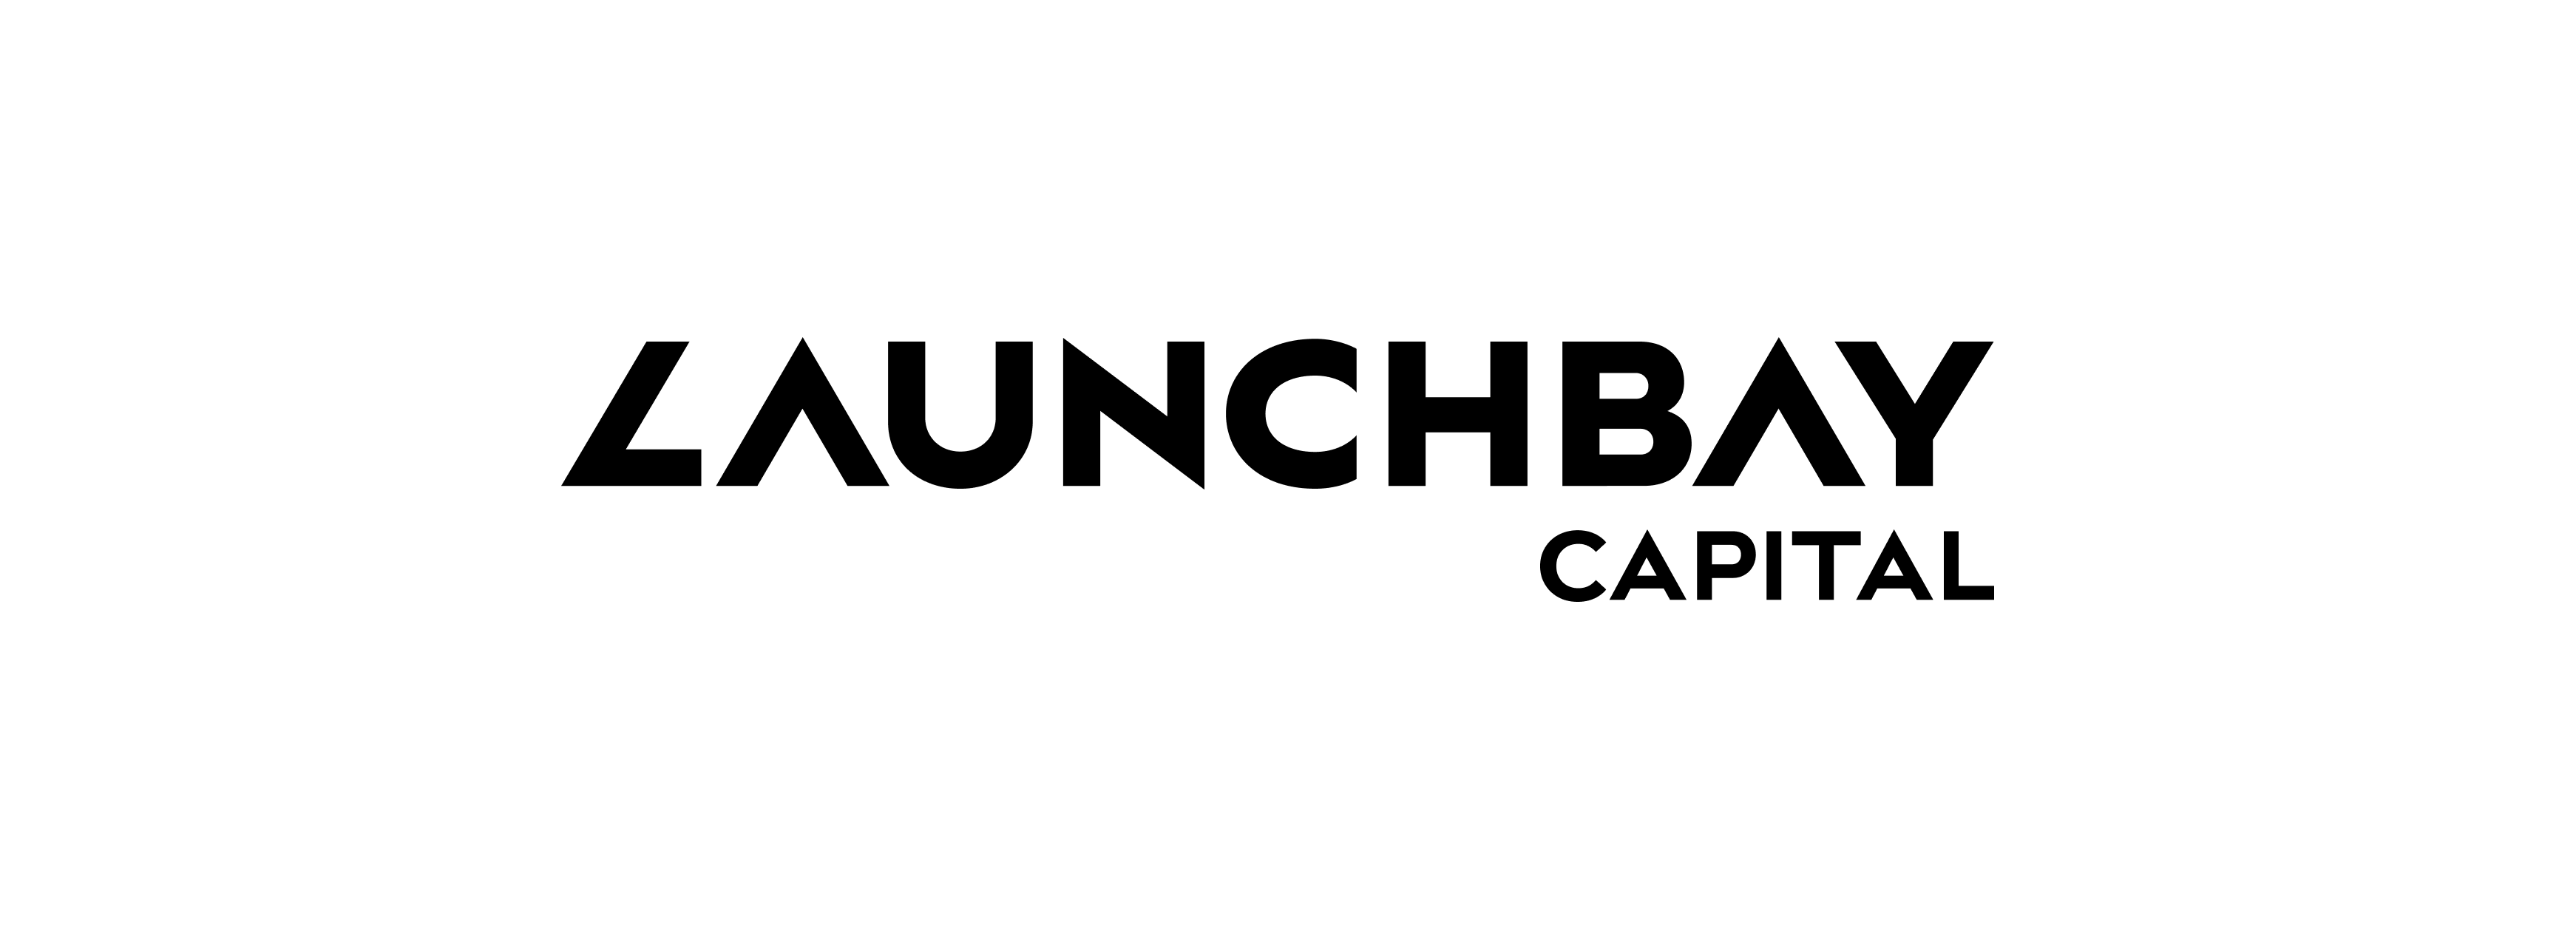 Launchbay Capital logo